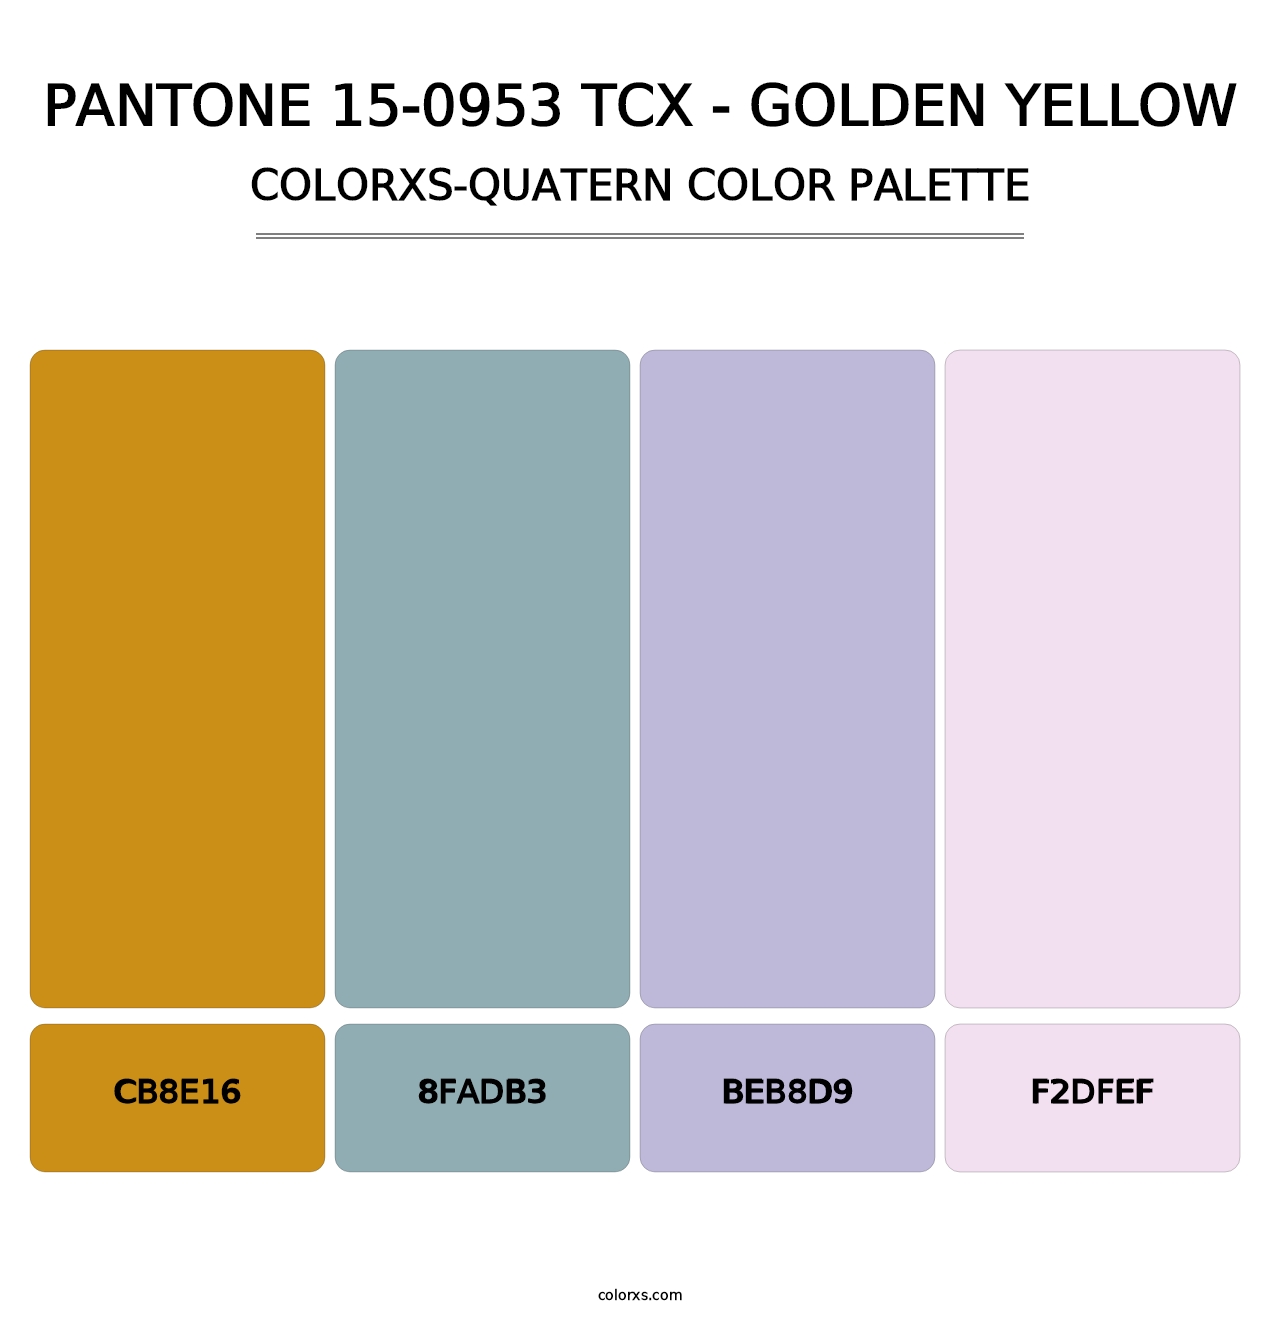 PANTONE 15-0953 TCX - Golden Yellow - Colorxs Quatern Palette